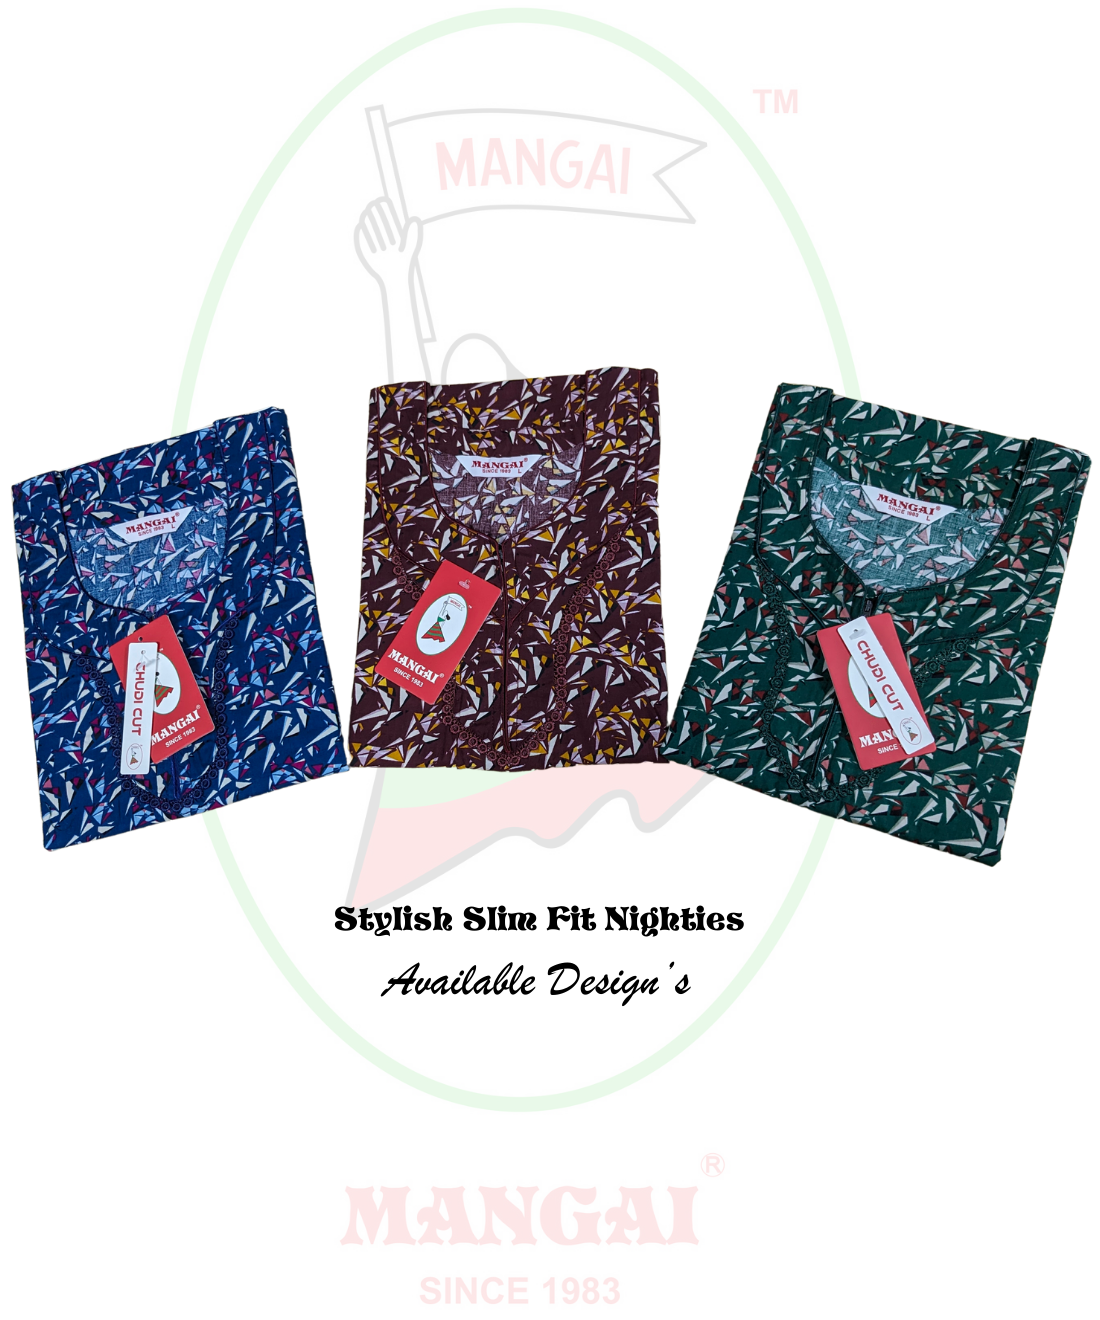 MANGAI Premium Regular Fit Cotton Nighties - All Over Printed Stylish Nightwear for Stylish Women | Beautiful Nighties for Stylish Women's | Shrinkage Free Nighties | New CHUDI Cut Model